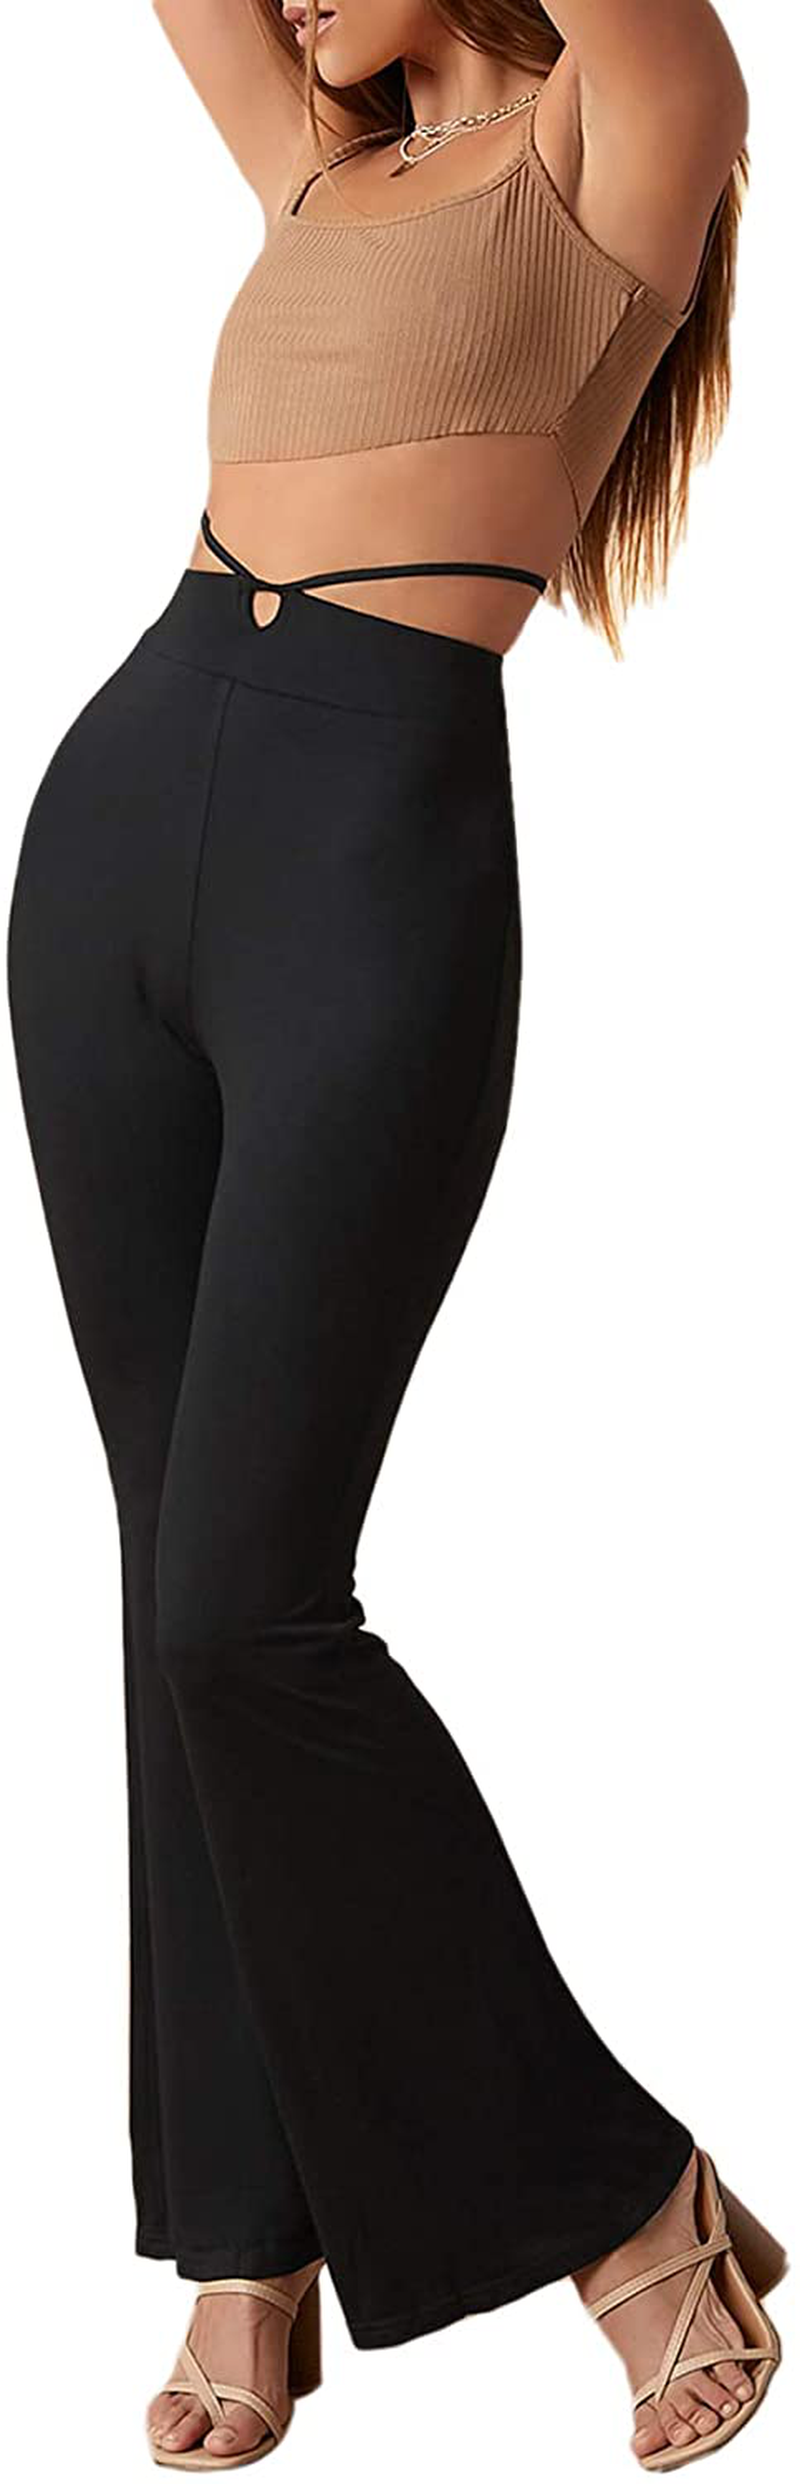 SheIn Women's Cut Out High Elastic Waist Long Pants Flare Leg Solid Trousers